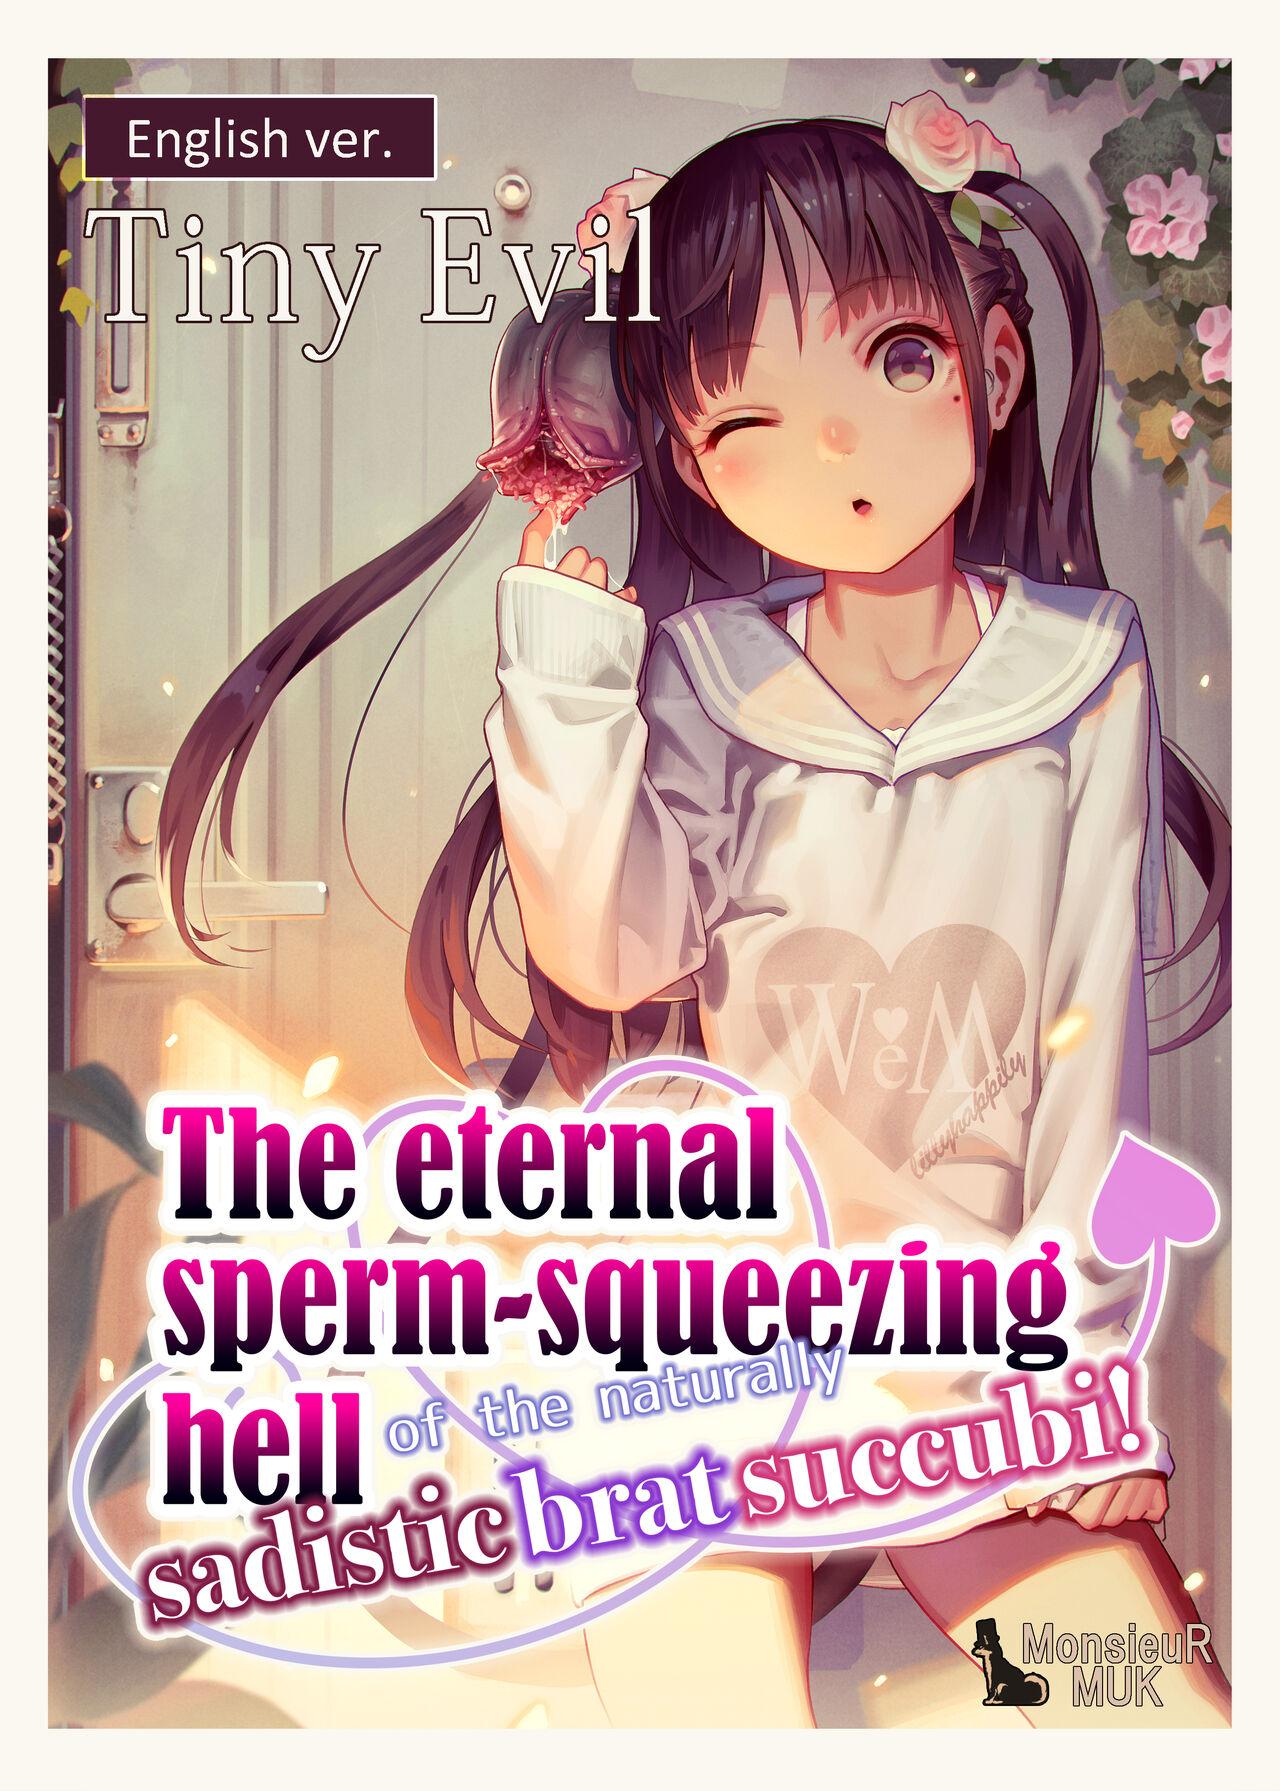 [muk] Tiny Evil - The eternal sperm-squeezing hell of the naturally sadistic brat succubi! (original size) 0